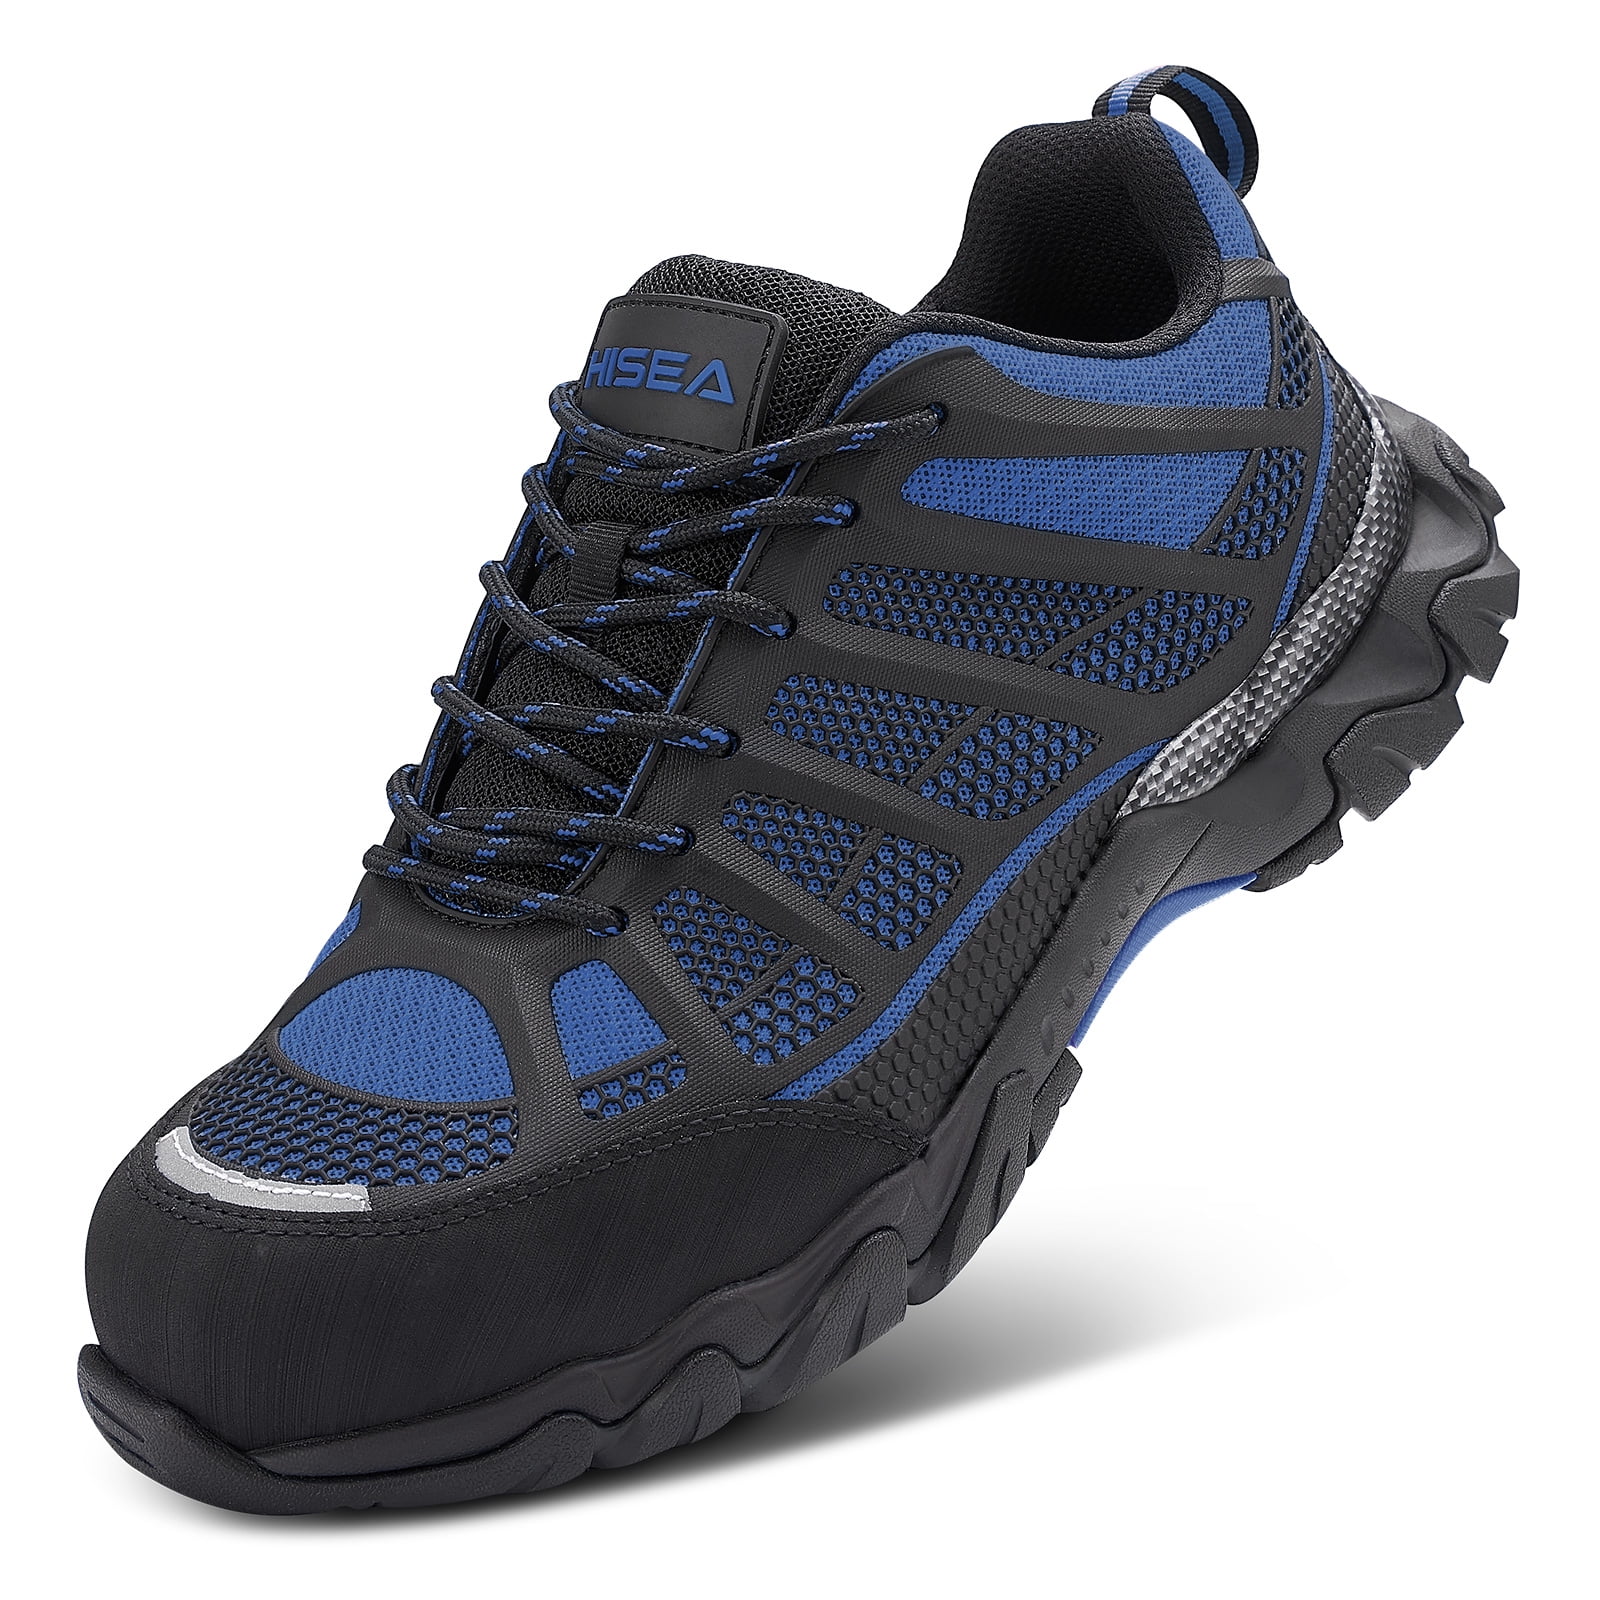 HISEA Work Shoes for Men Breathable Steel Toe Non-Slip Work Shoe ...